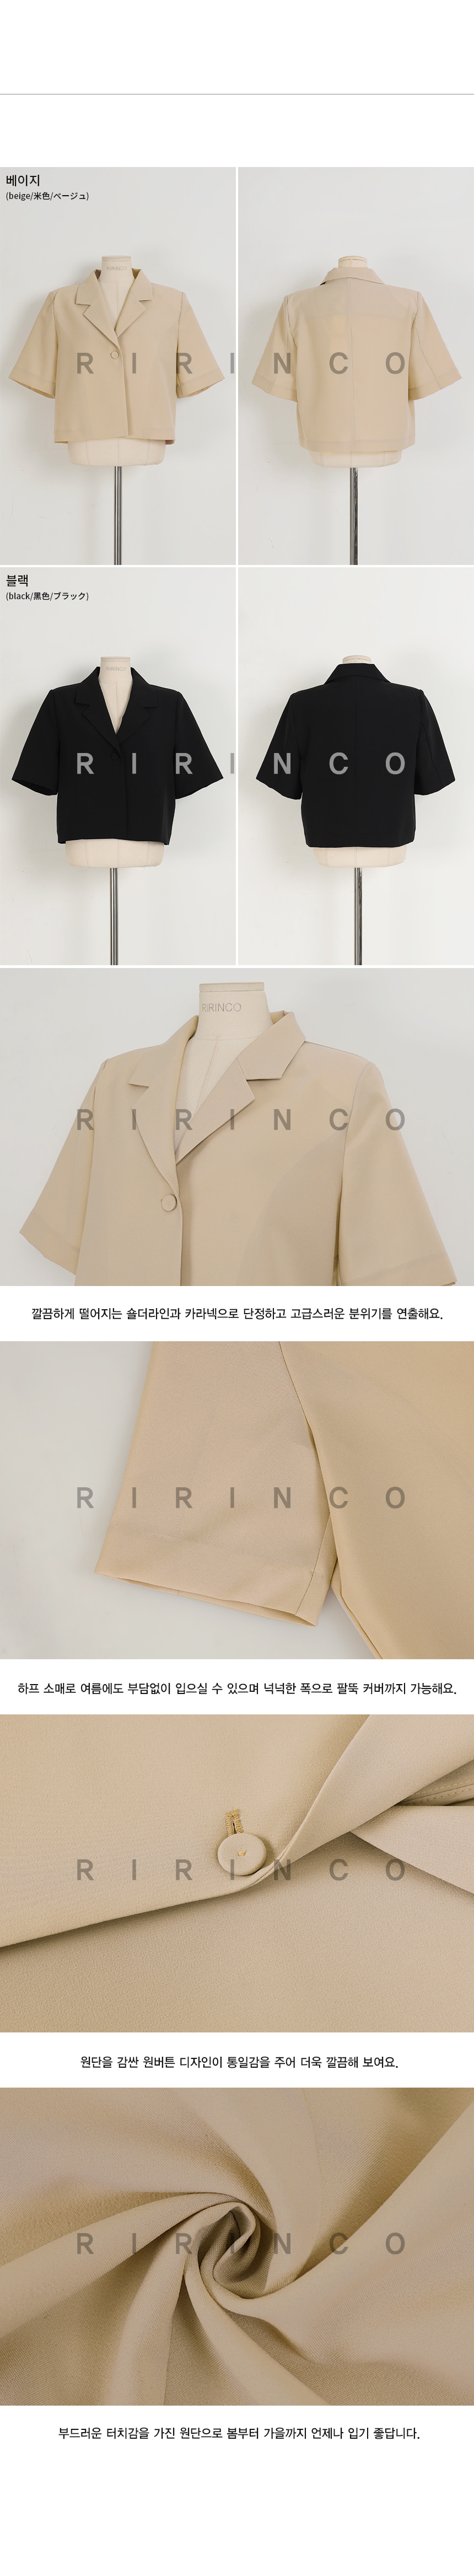 RIRINCO ツピース ワンボタンクロップジャケット